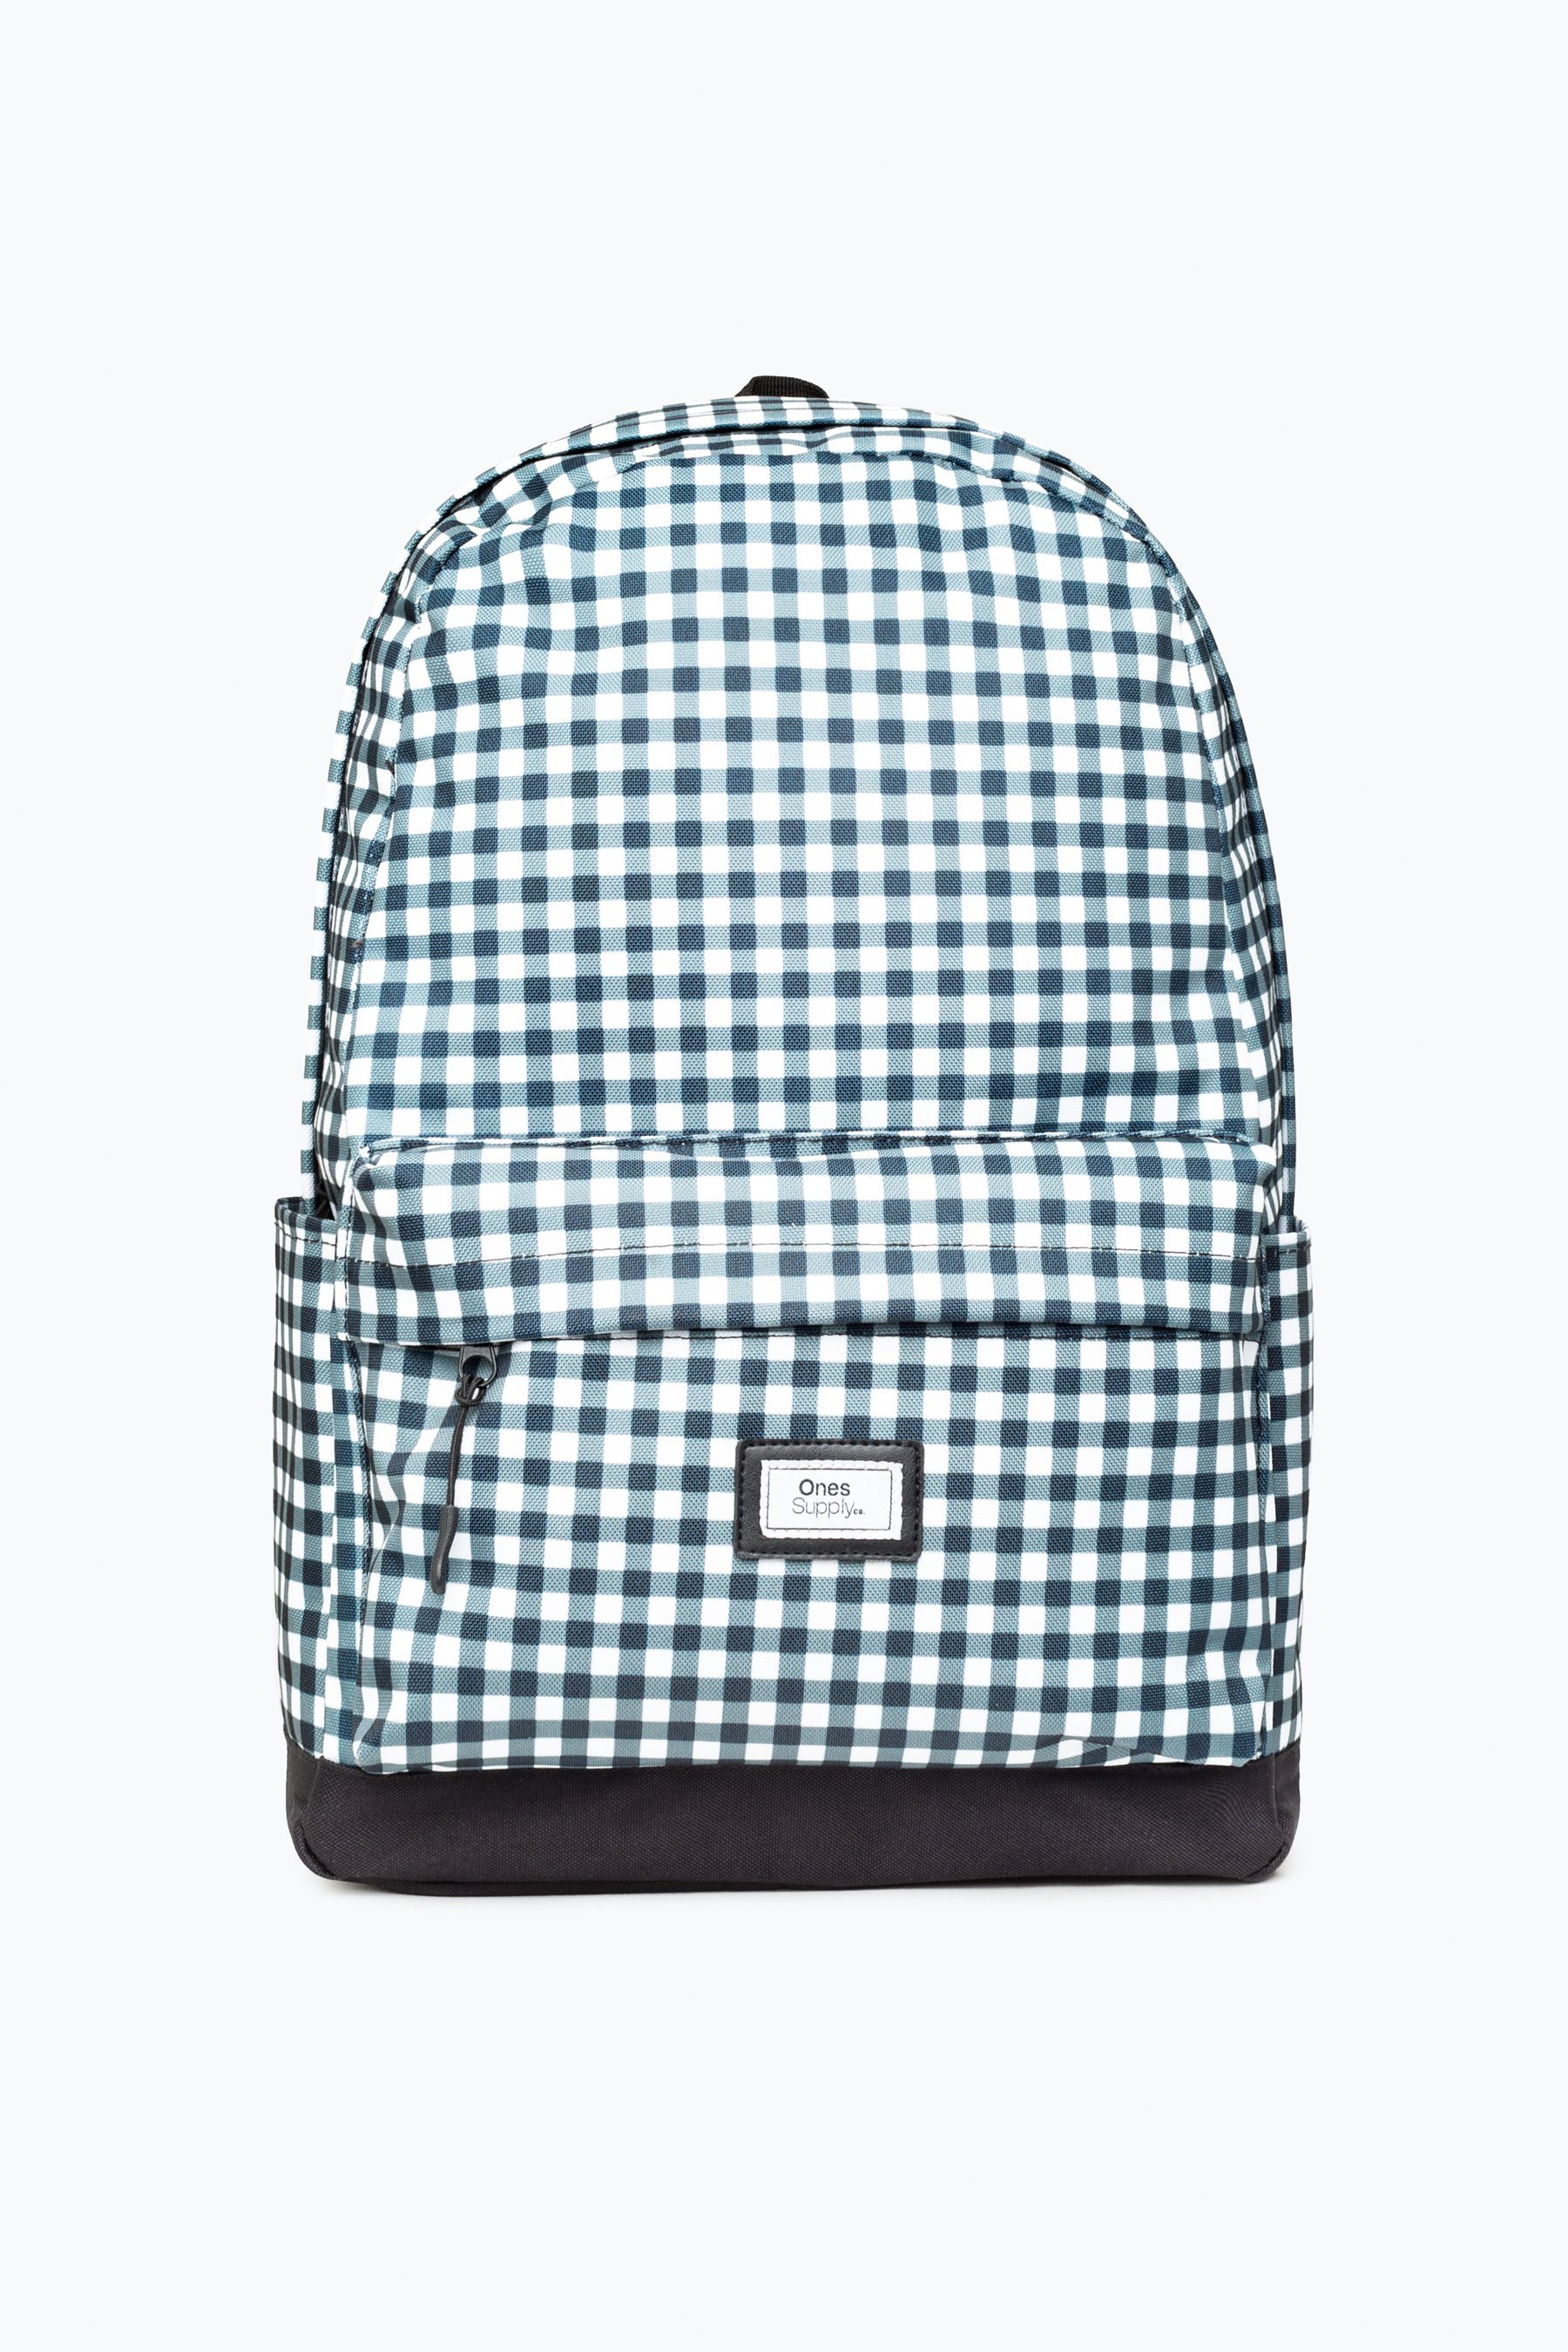 Hype Gingham Mono Core Green/white Backpack School Bag